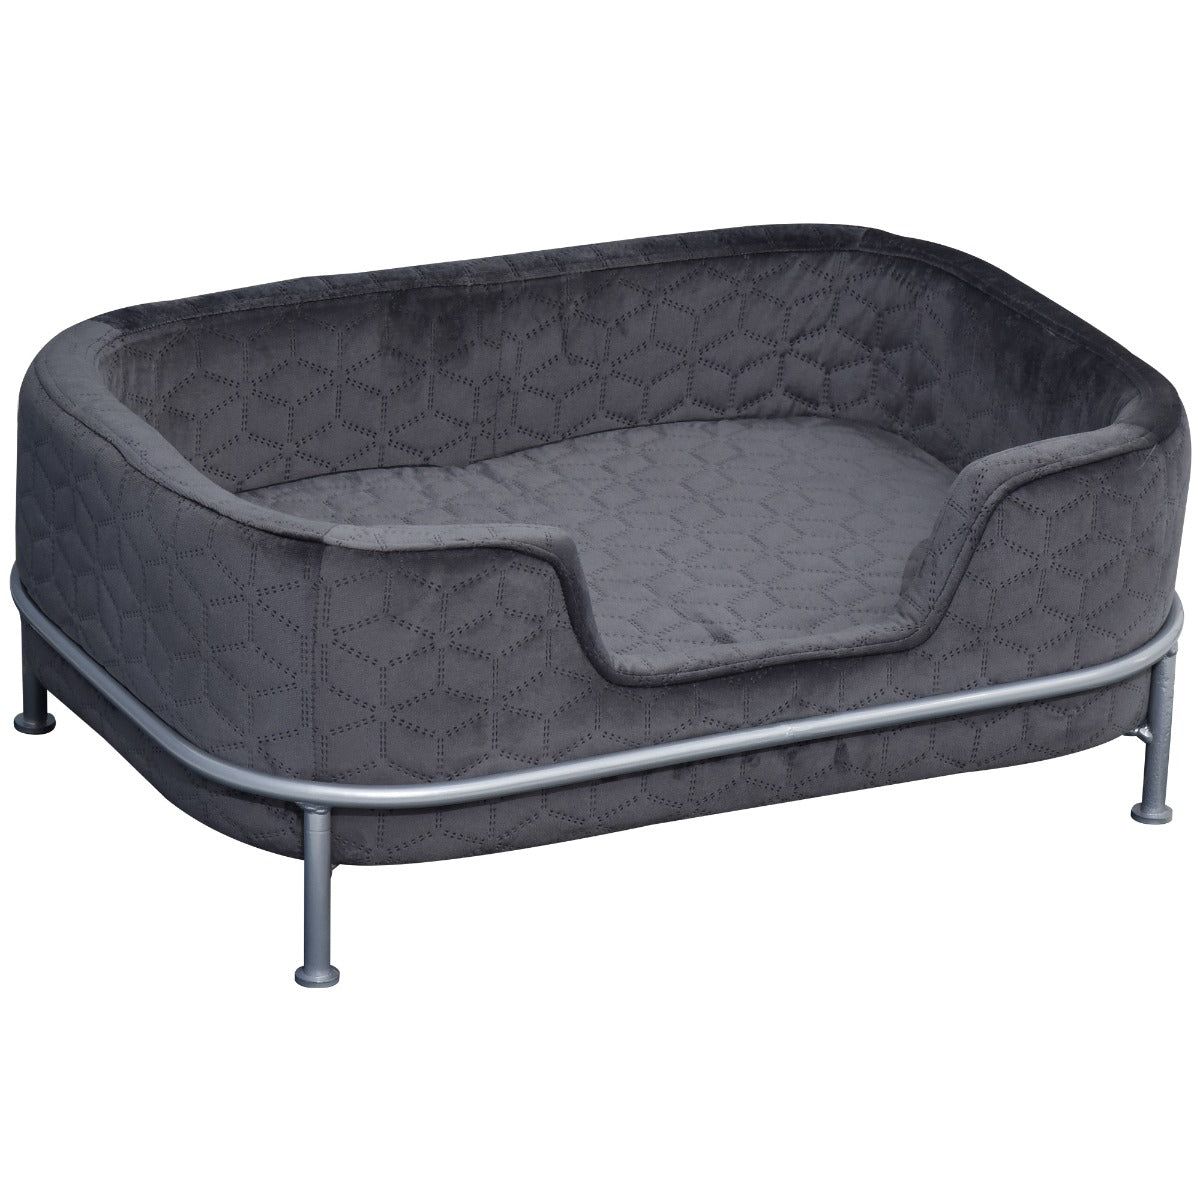 Velvet Upholstered Elevated Small Pet Bed Grey